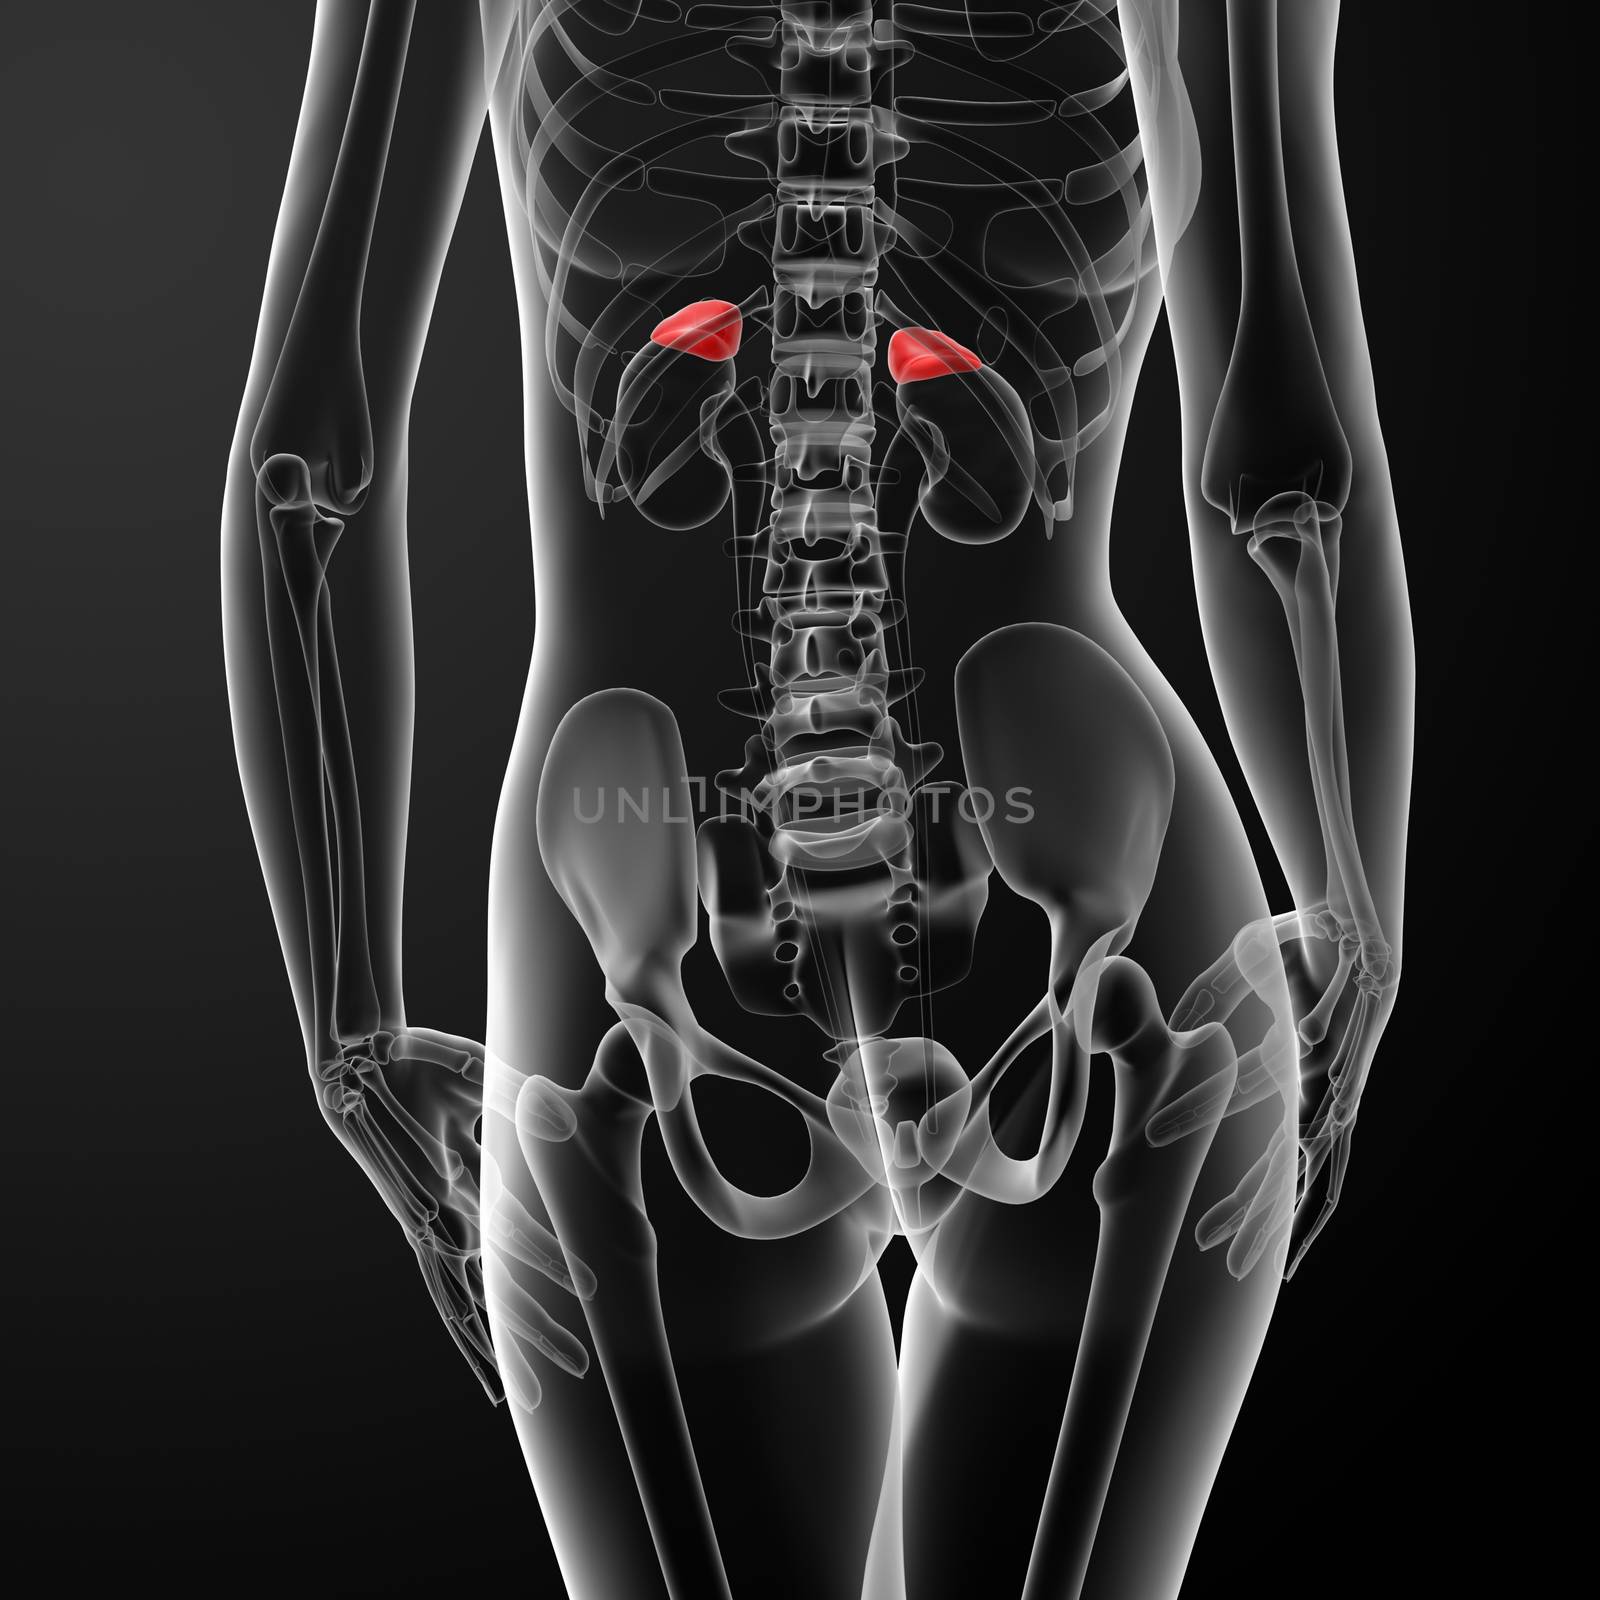 Female adrenal anatomy x-ray - back view